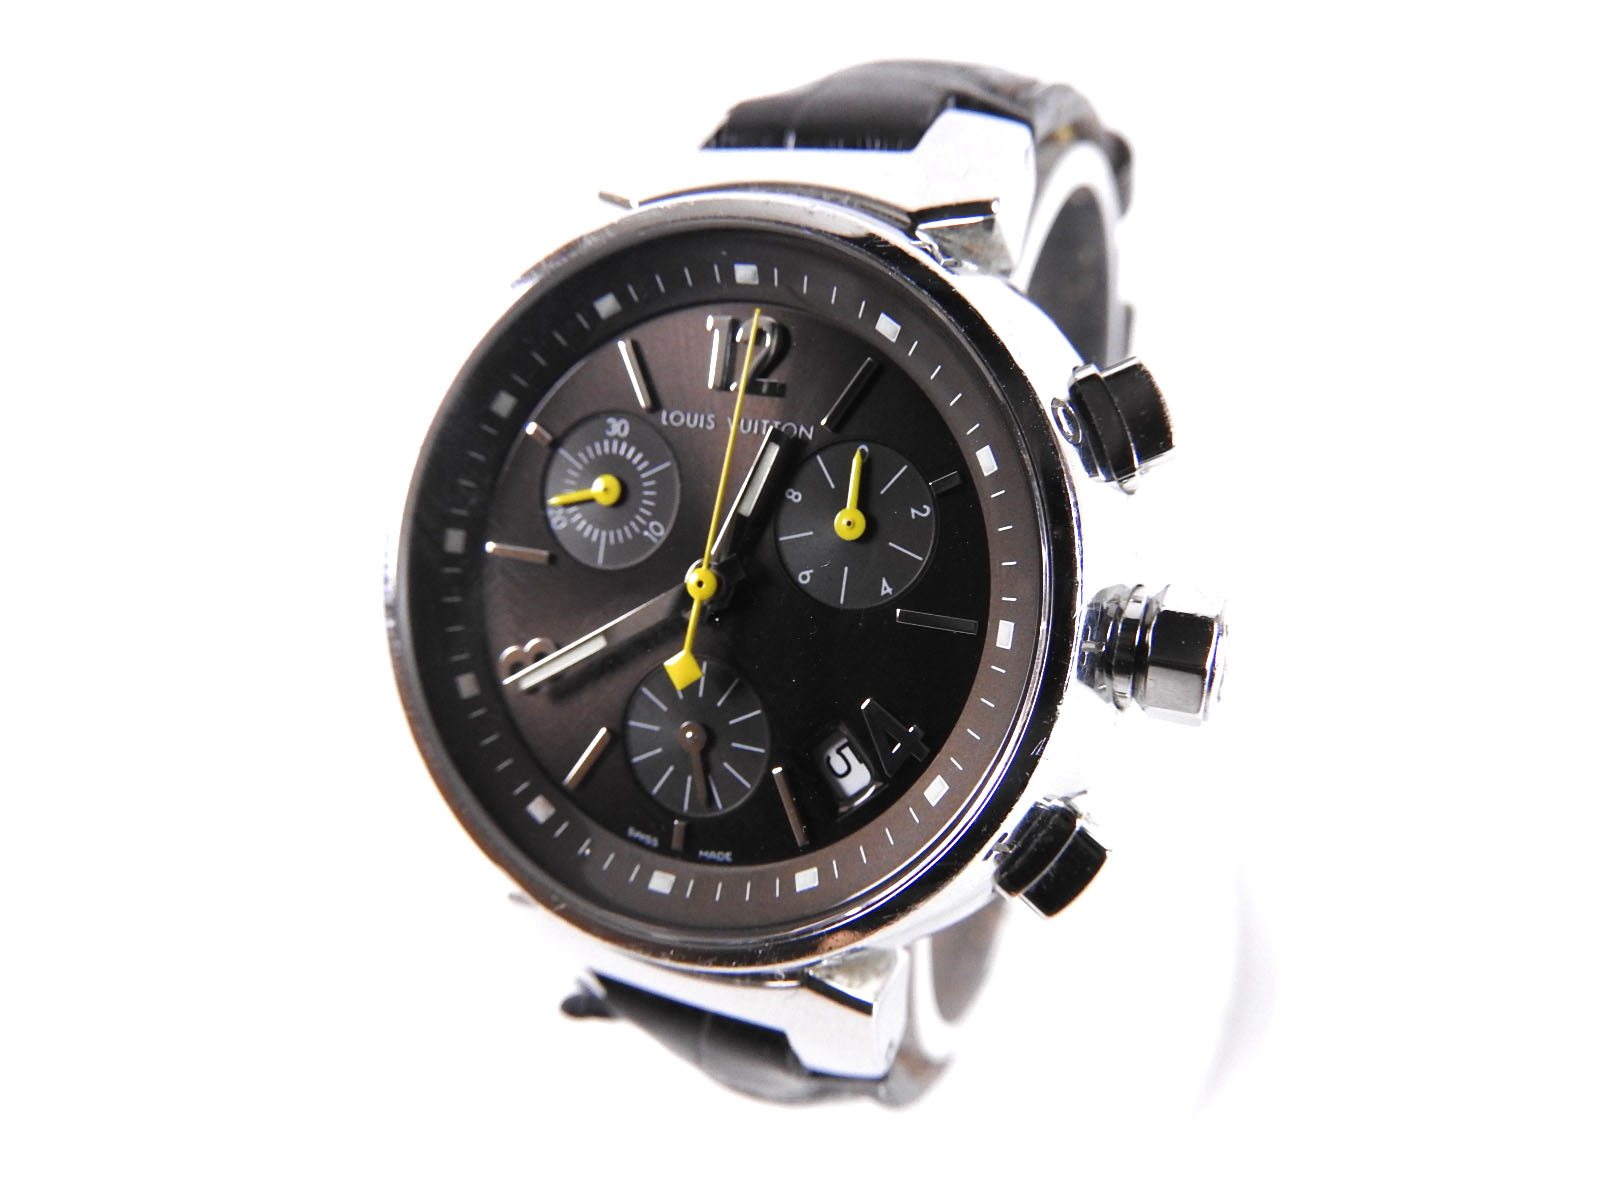 LOUIS VUITTON Tambour Chronograph Ladies Wrist Watch Q1321 SS Leather QZ A-4916 | eBay